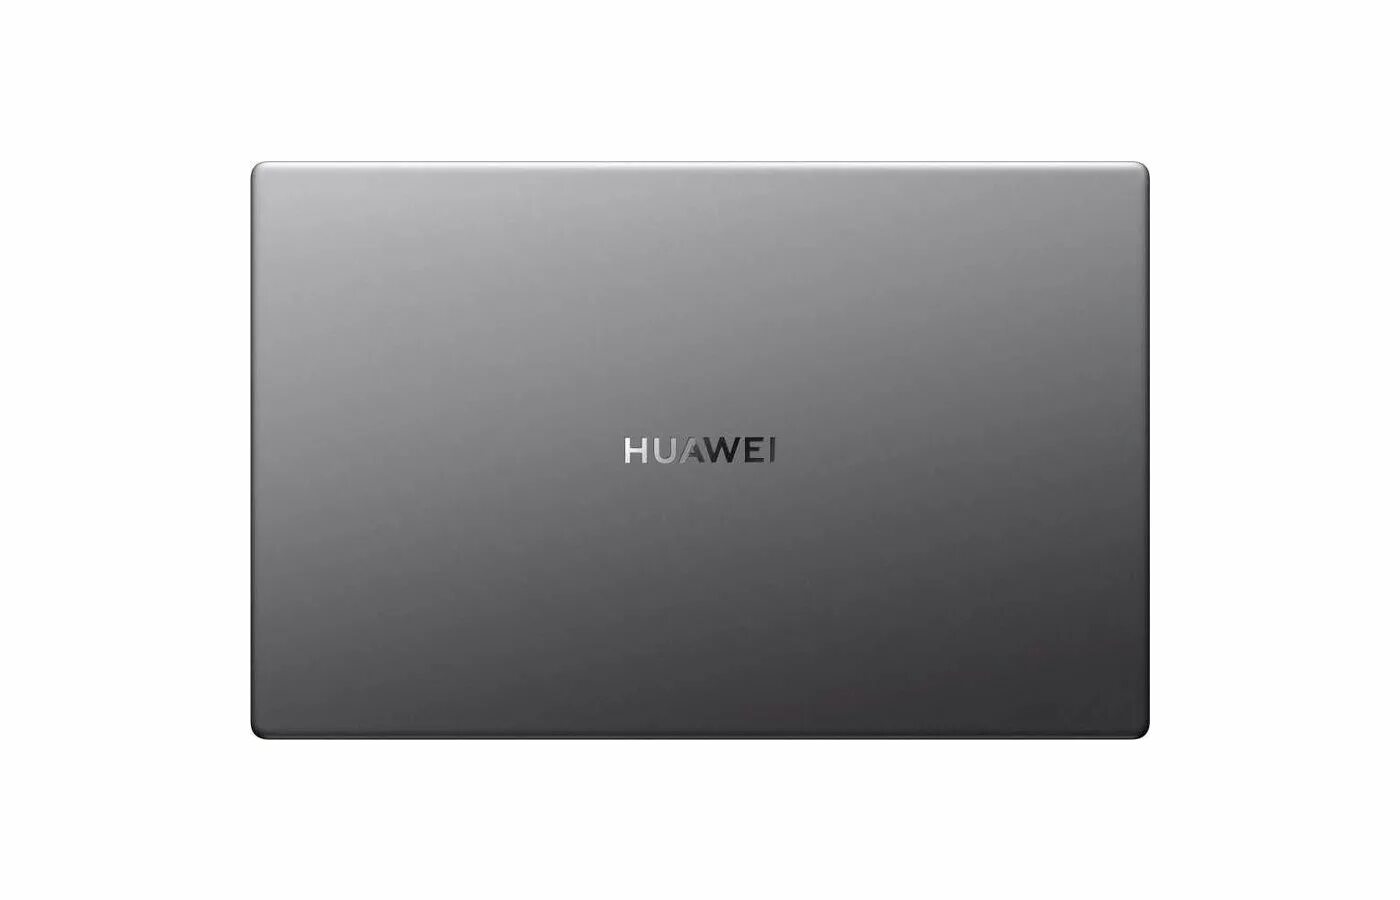 Ноутбук Huawei MATEBOOK D 15 Bob-wai9 8+256gb Mystic Silver. 14" Ноутбук Huawei MATEBOOK D 14nbb-wai9. 15.6" Ноутбук Huawei MATEBOOK D. Ноутбук Huawei 53013plu NBD-wdi9 MATEBOOK d14.